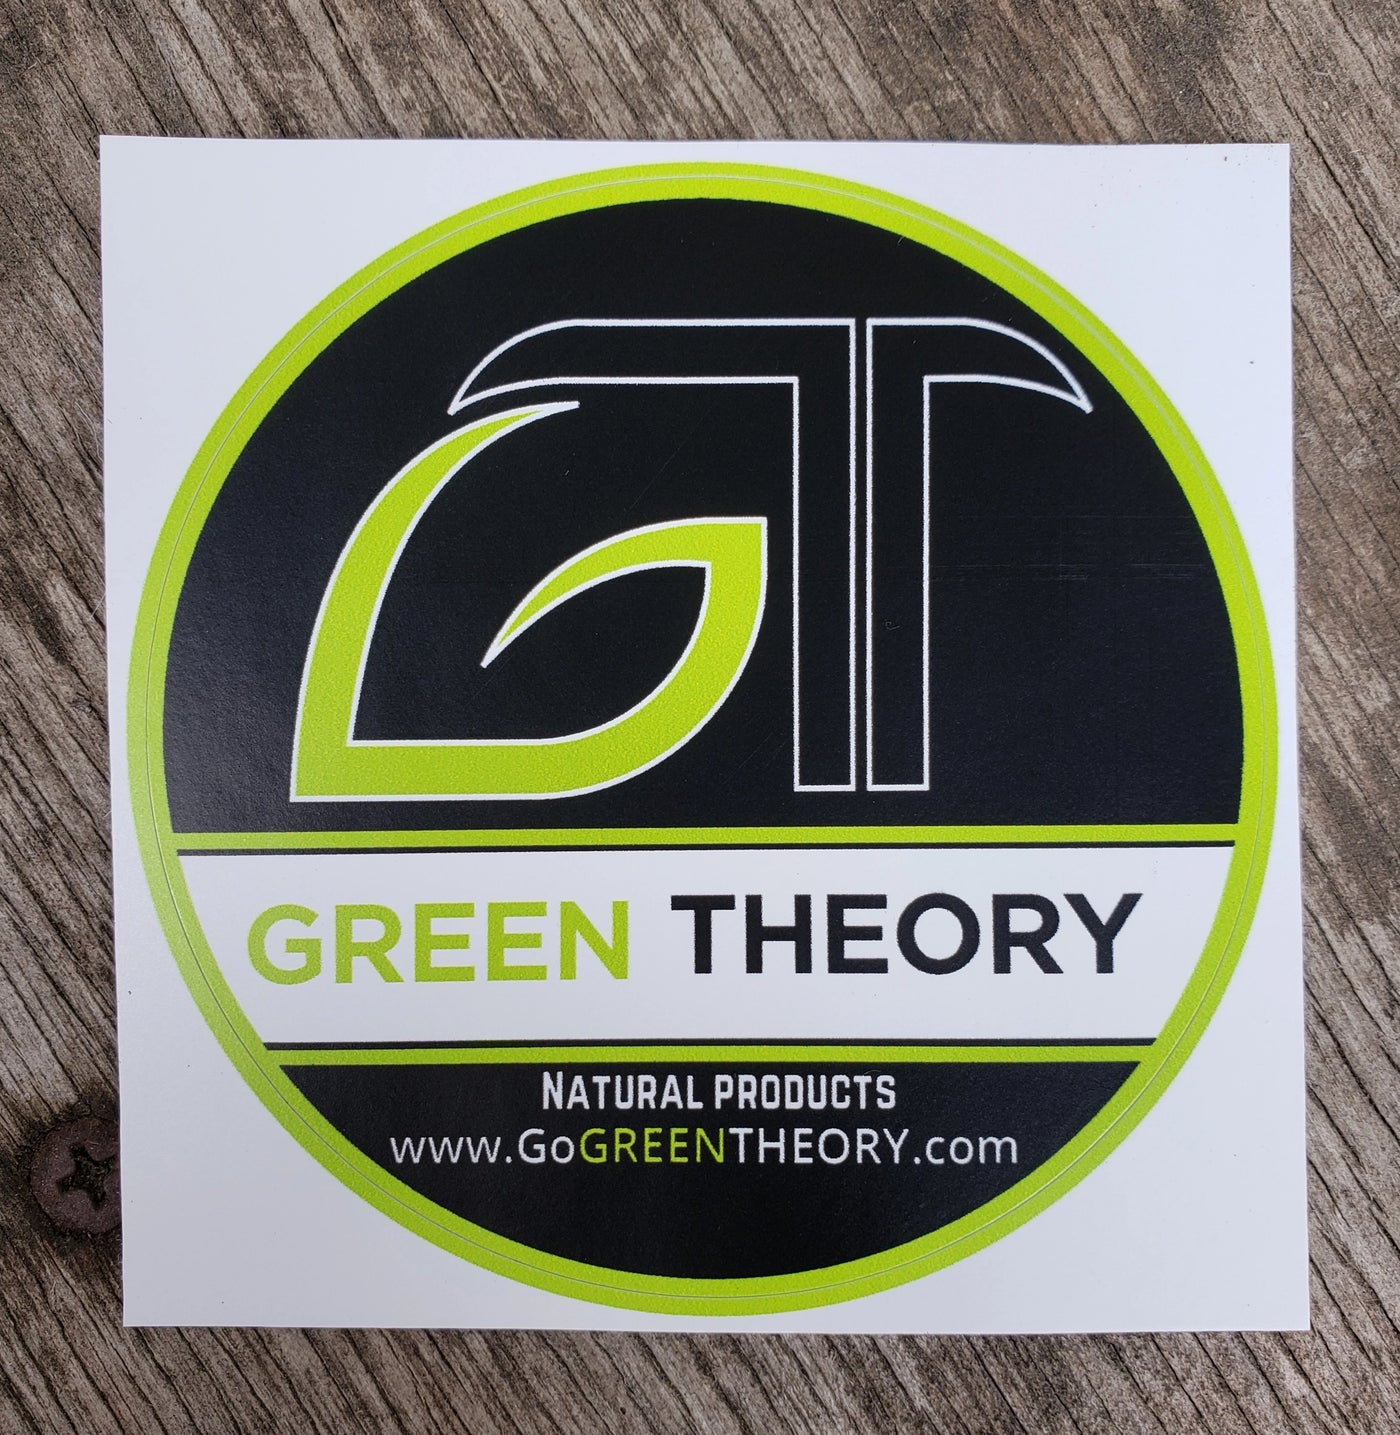 Green Theory black vinyl sticker on wood texture